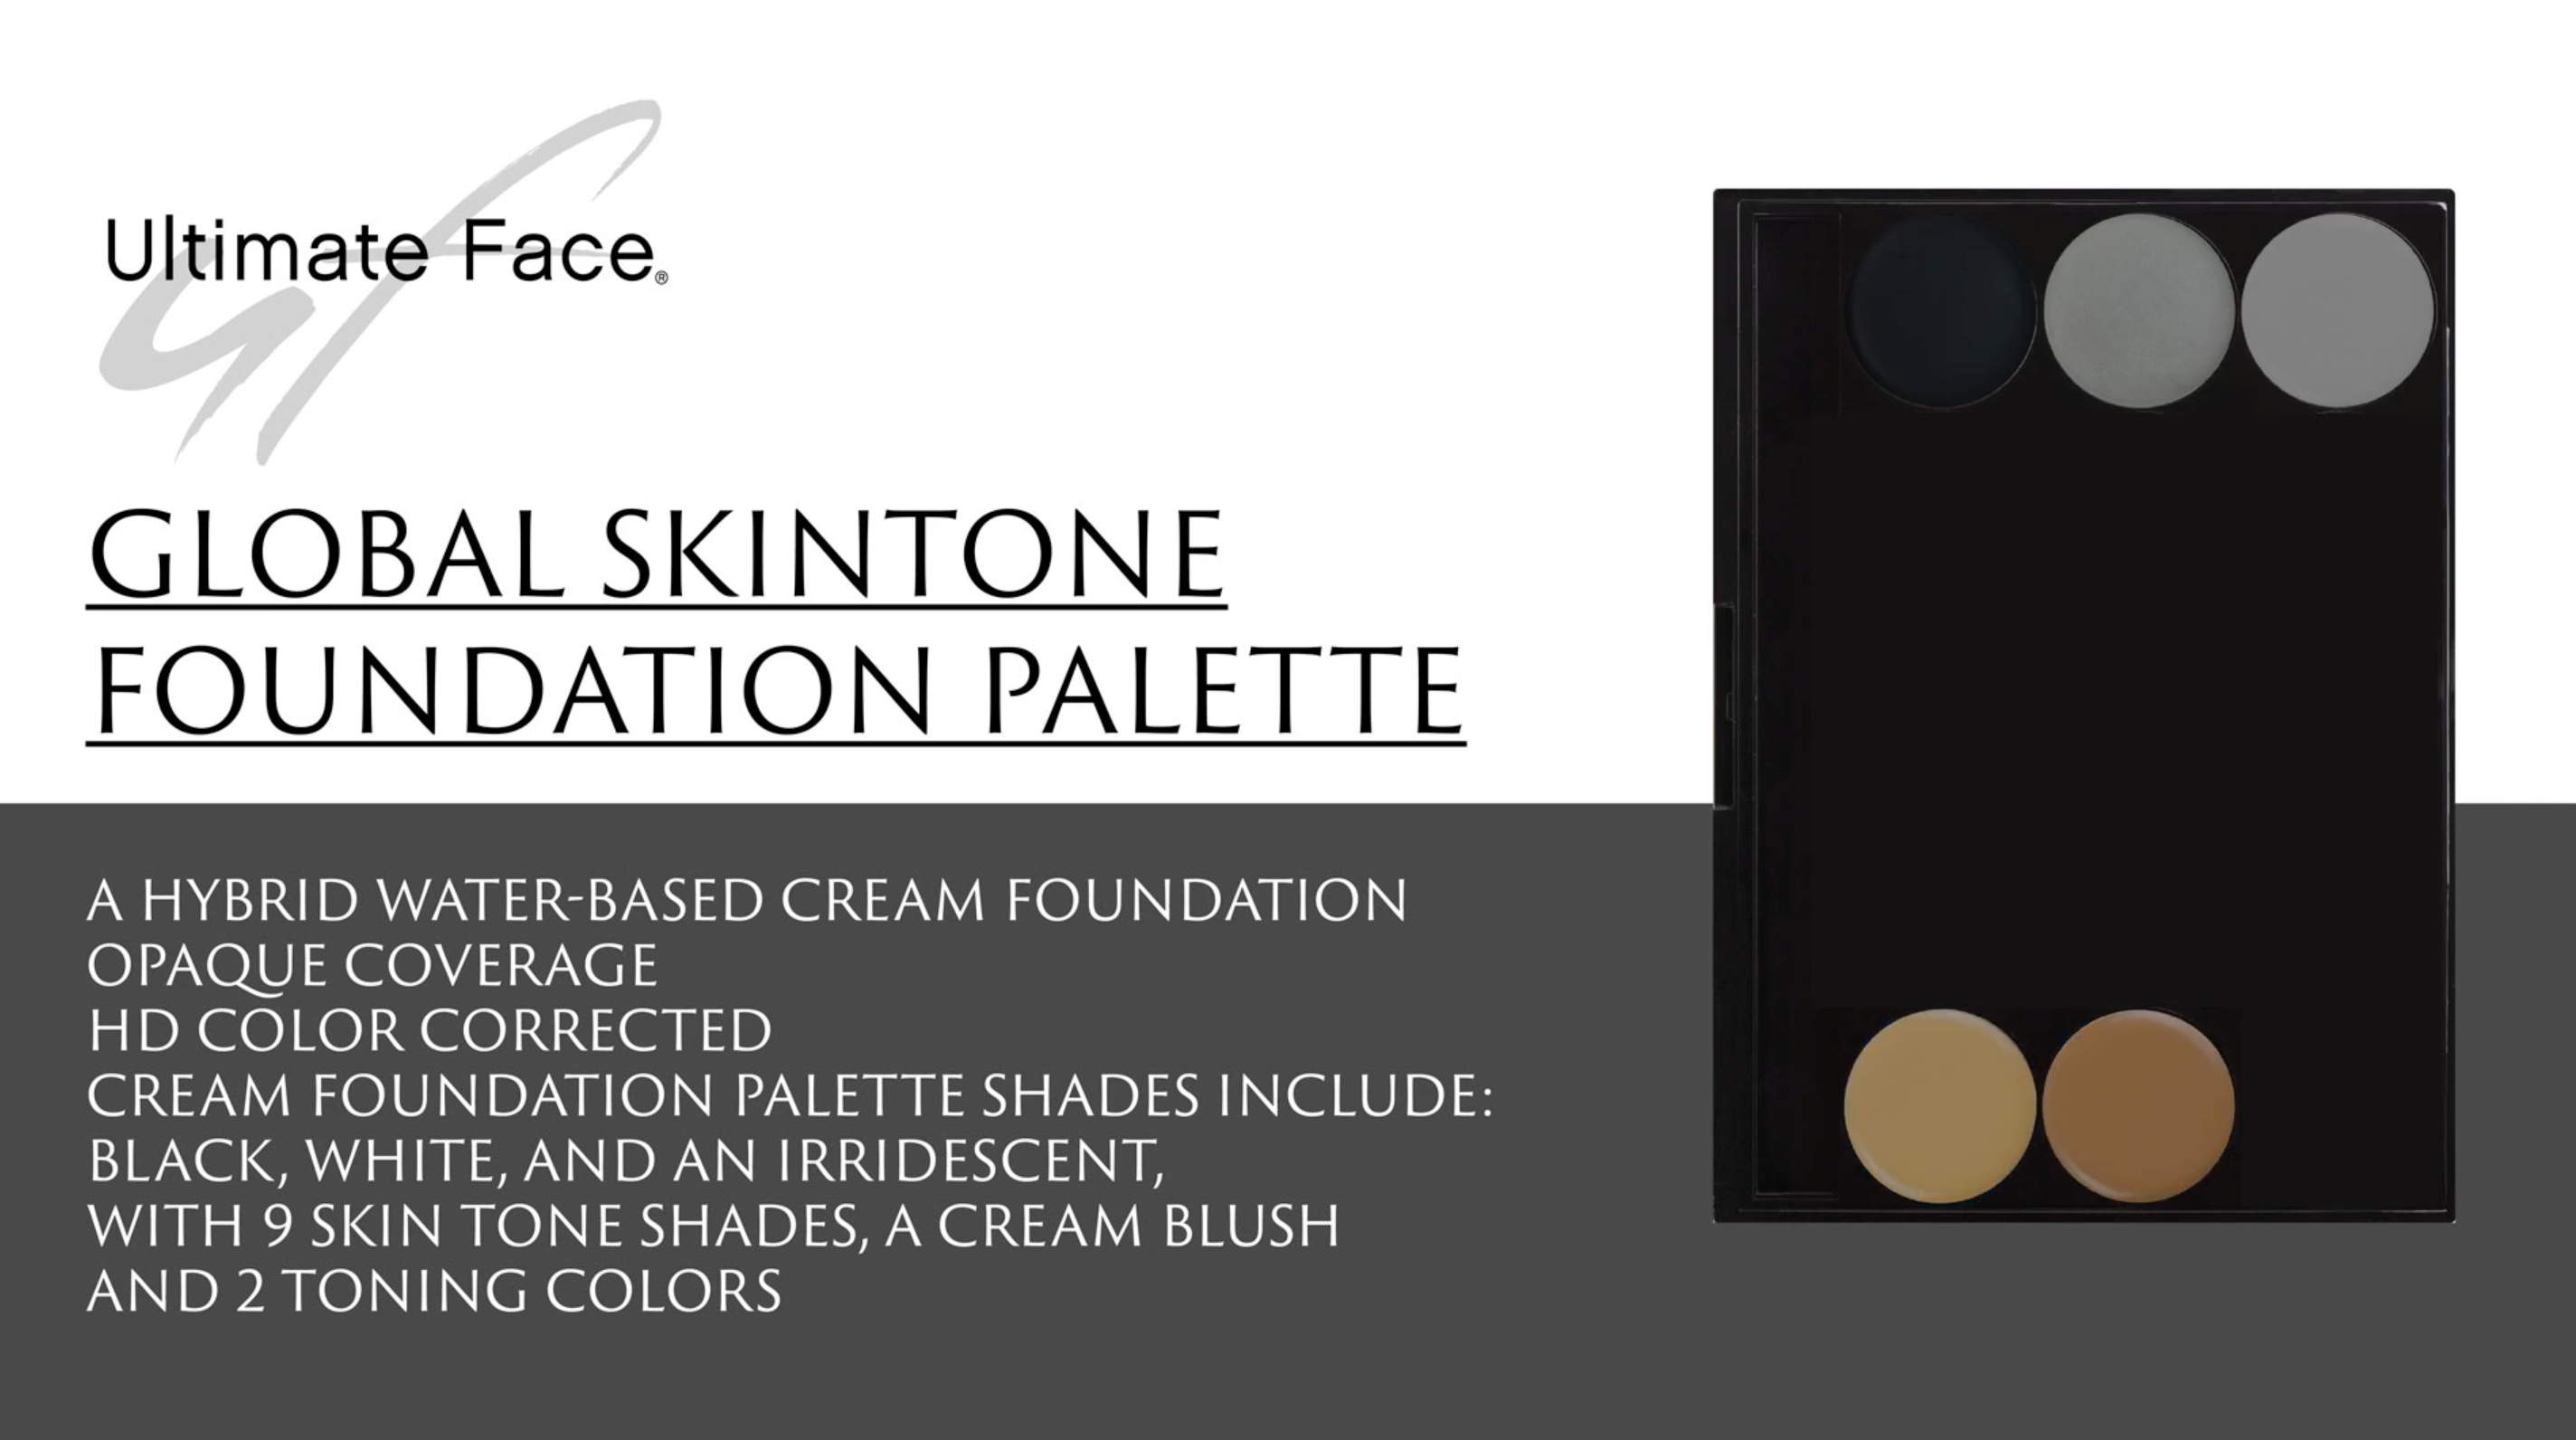 Ultimate Face Global Skin Tones Foundation Palette